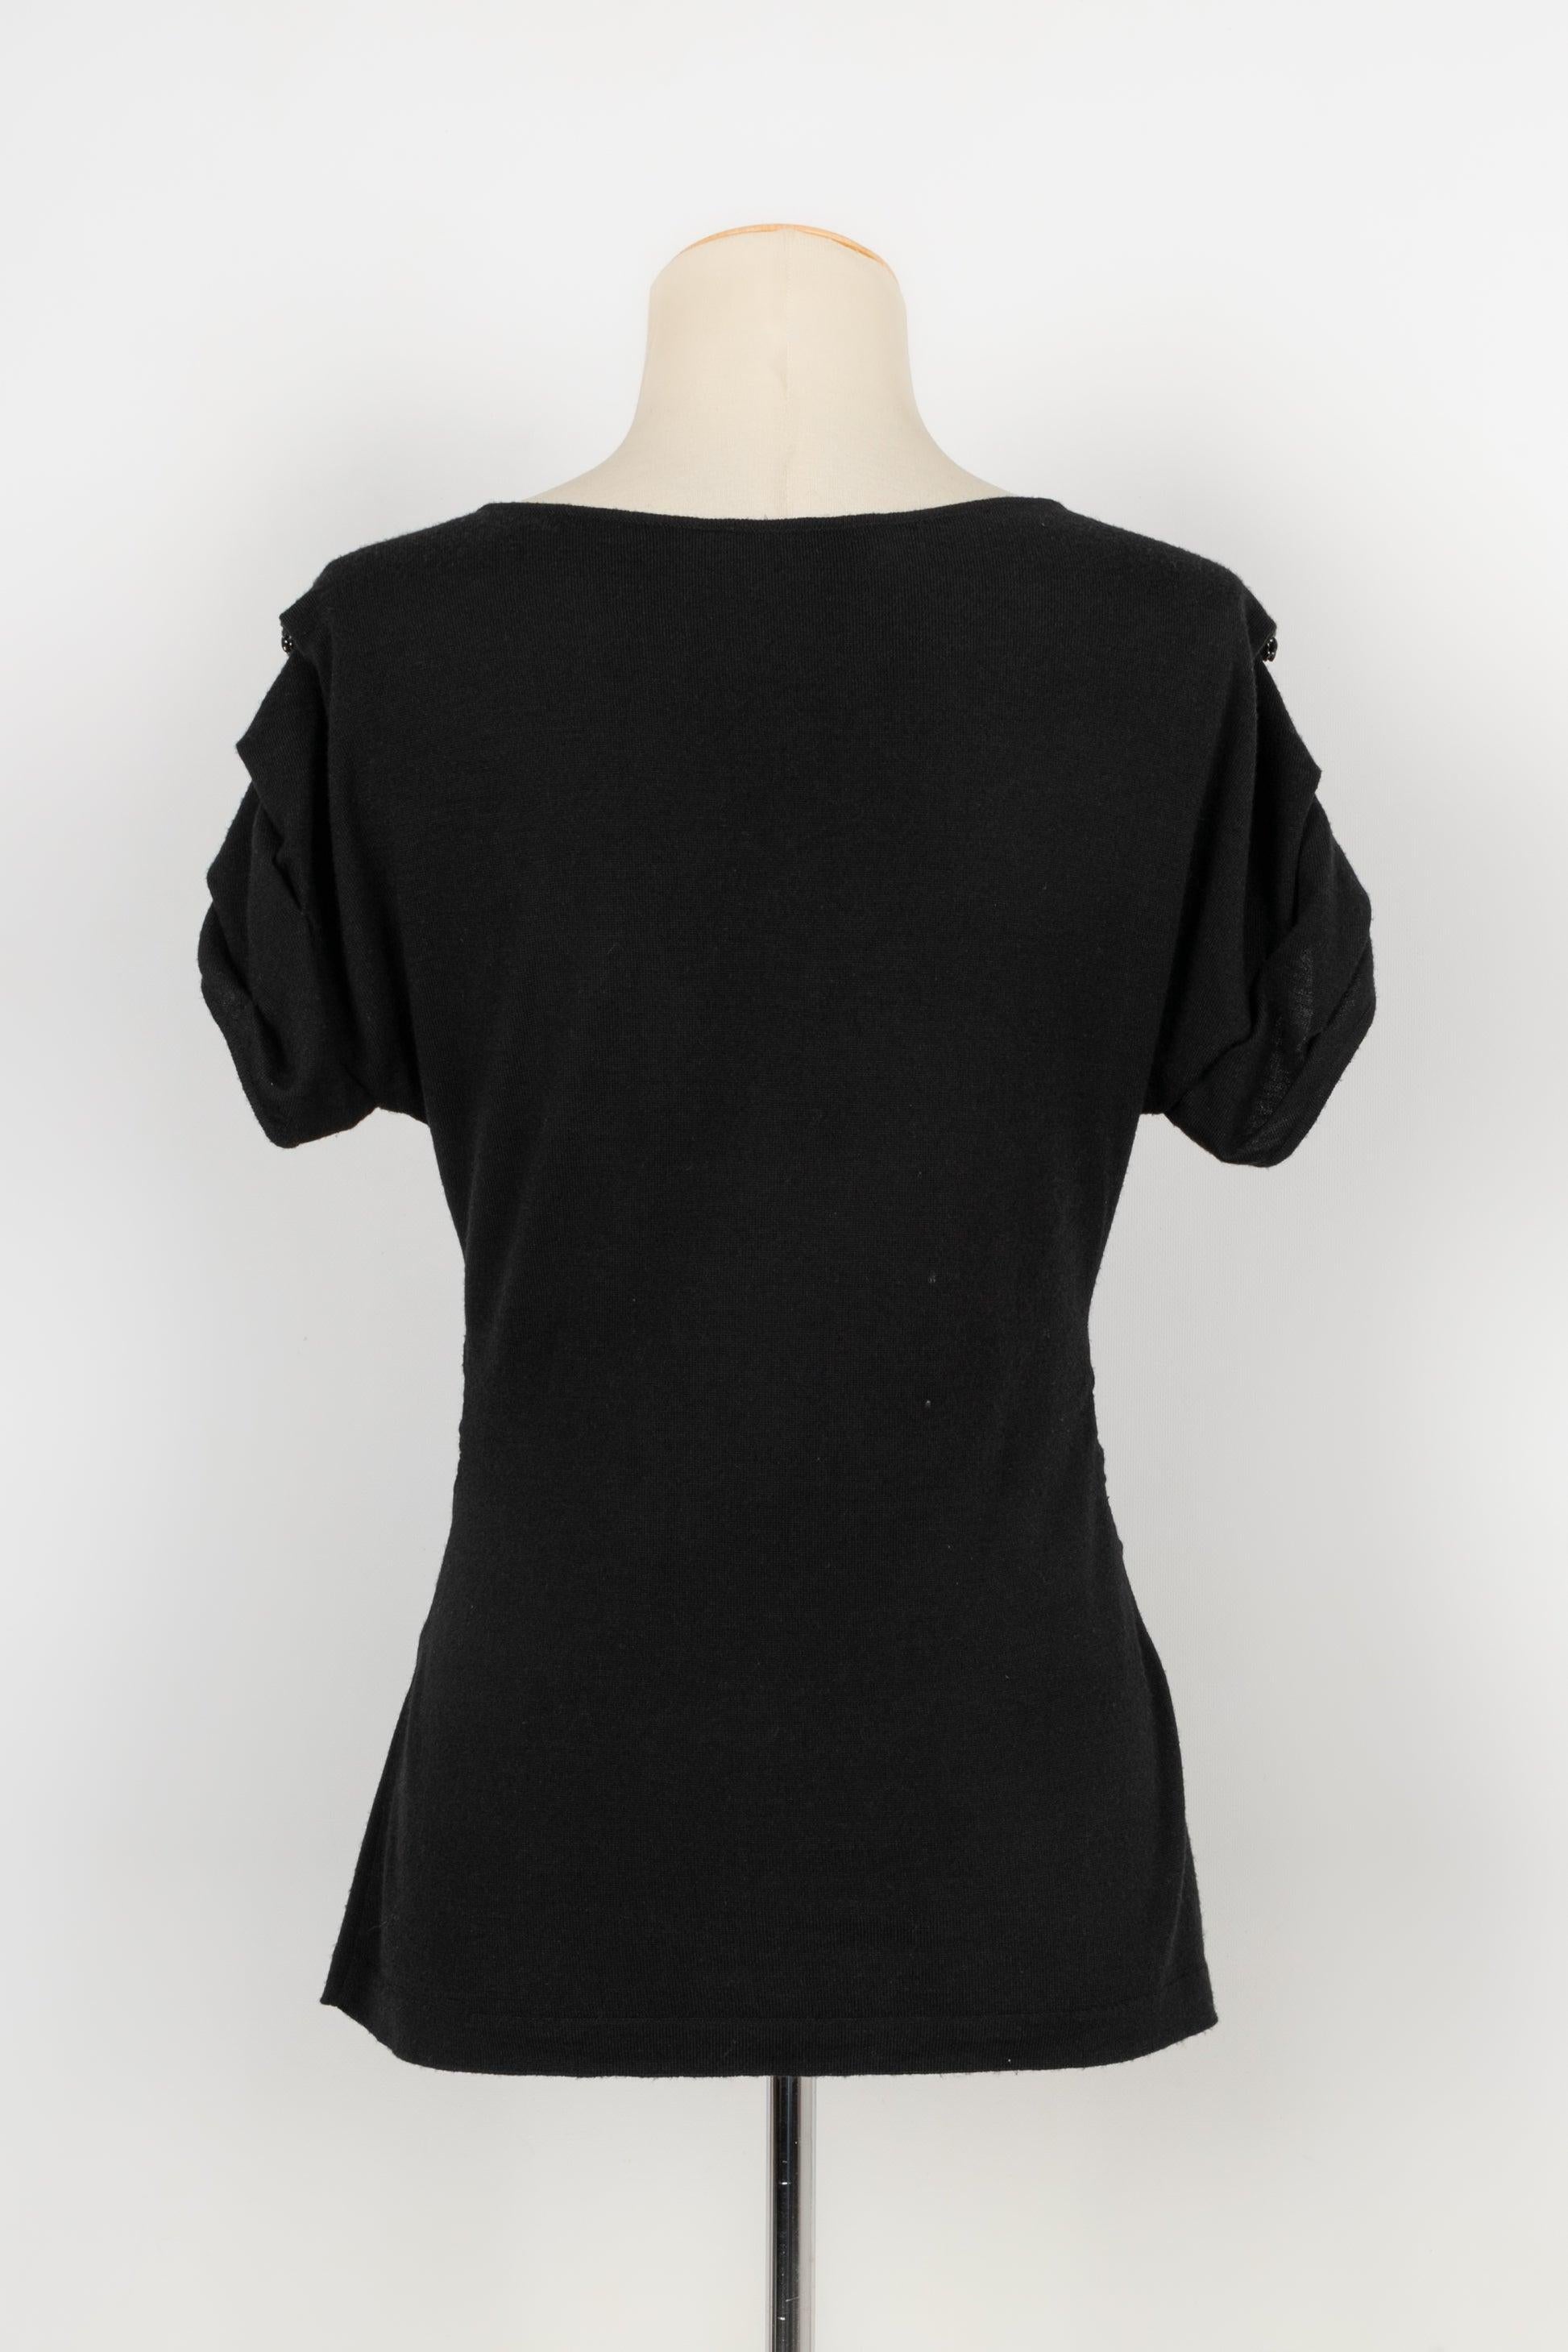 Women's Dior Black Wool Sweater 40FR For Sale